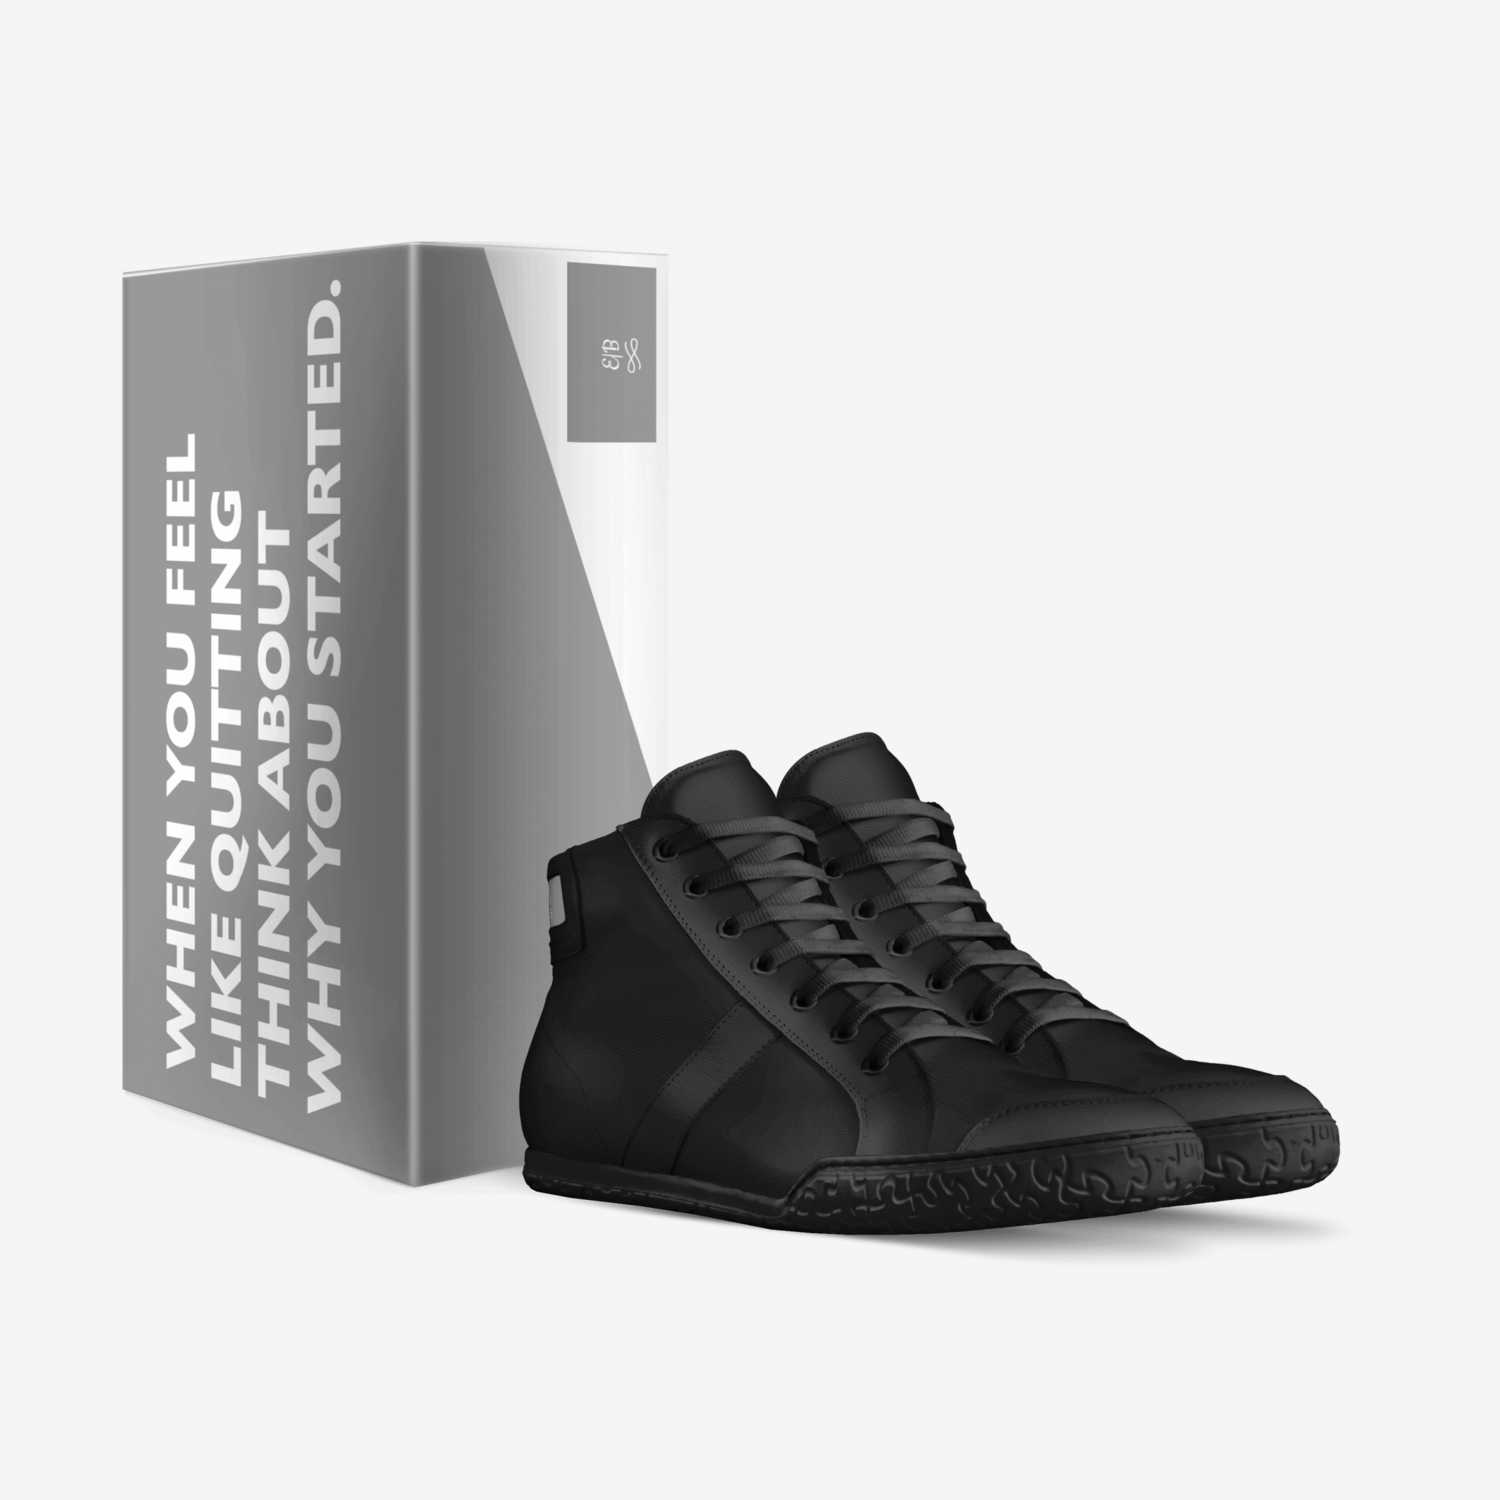 Elijah Brown custom made in Italy shoes by Elijah Brown | Box view